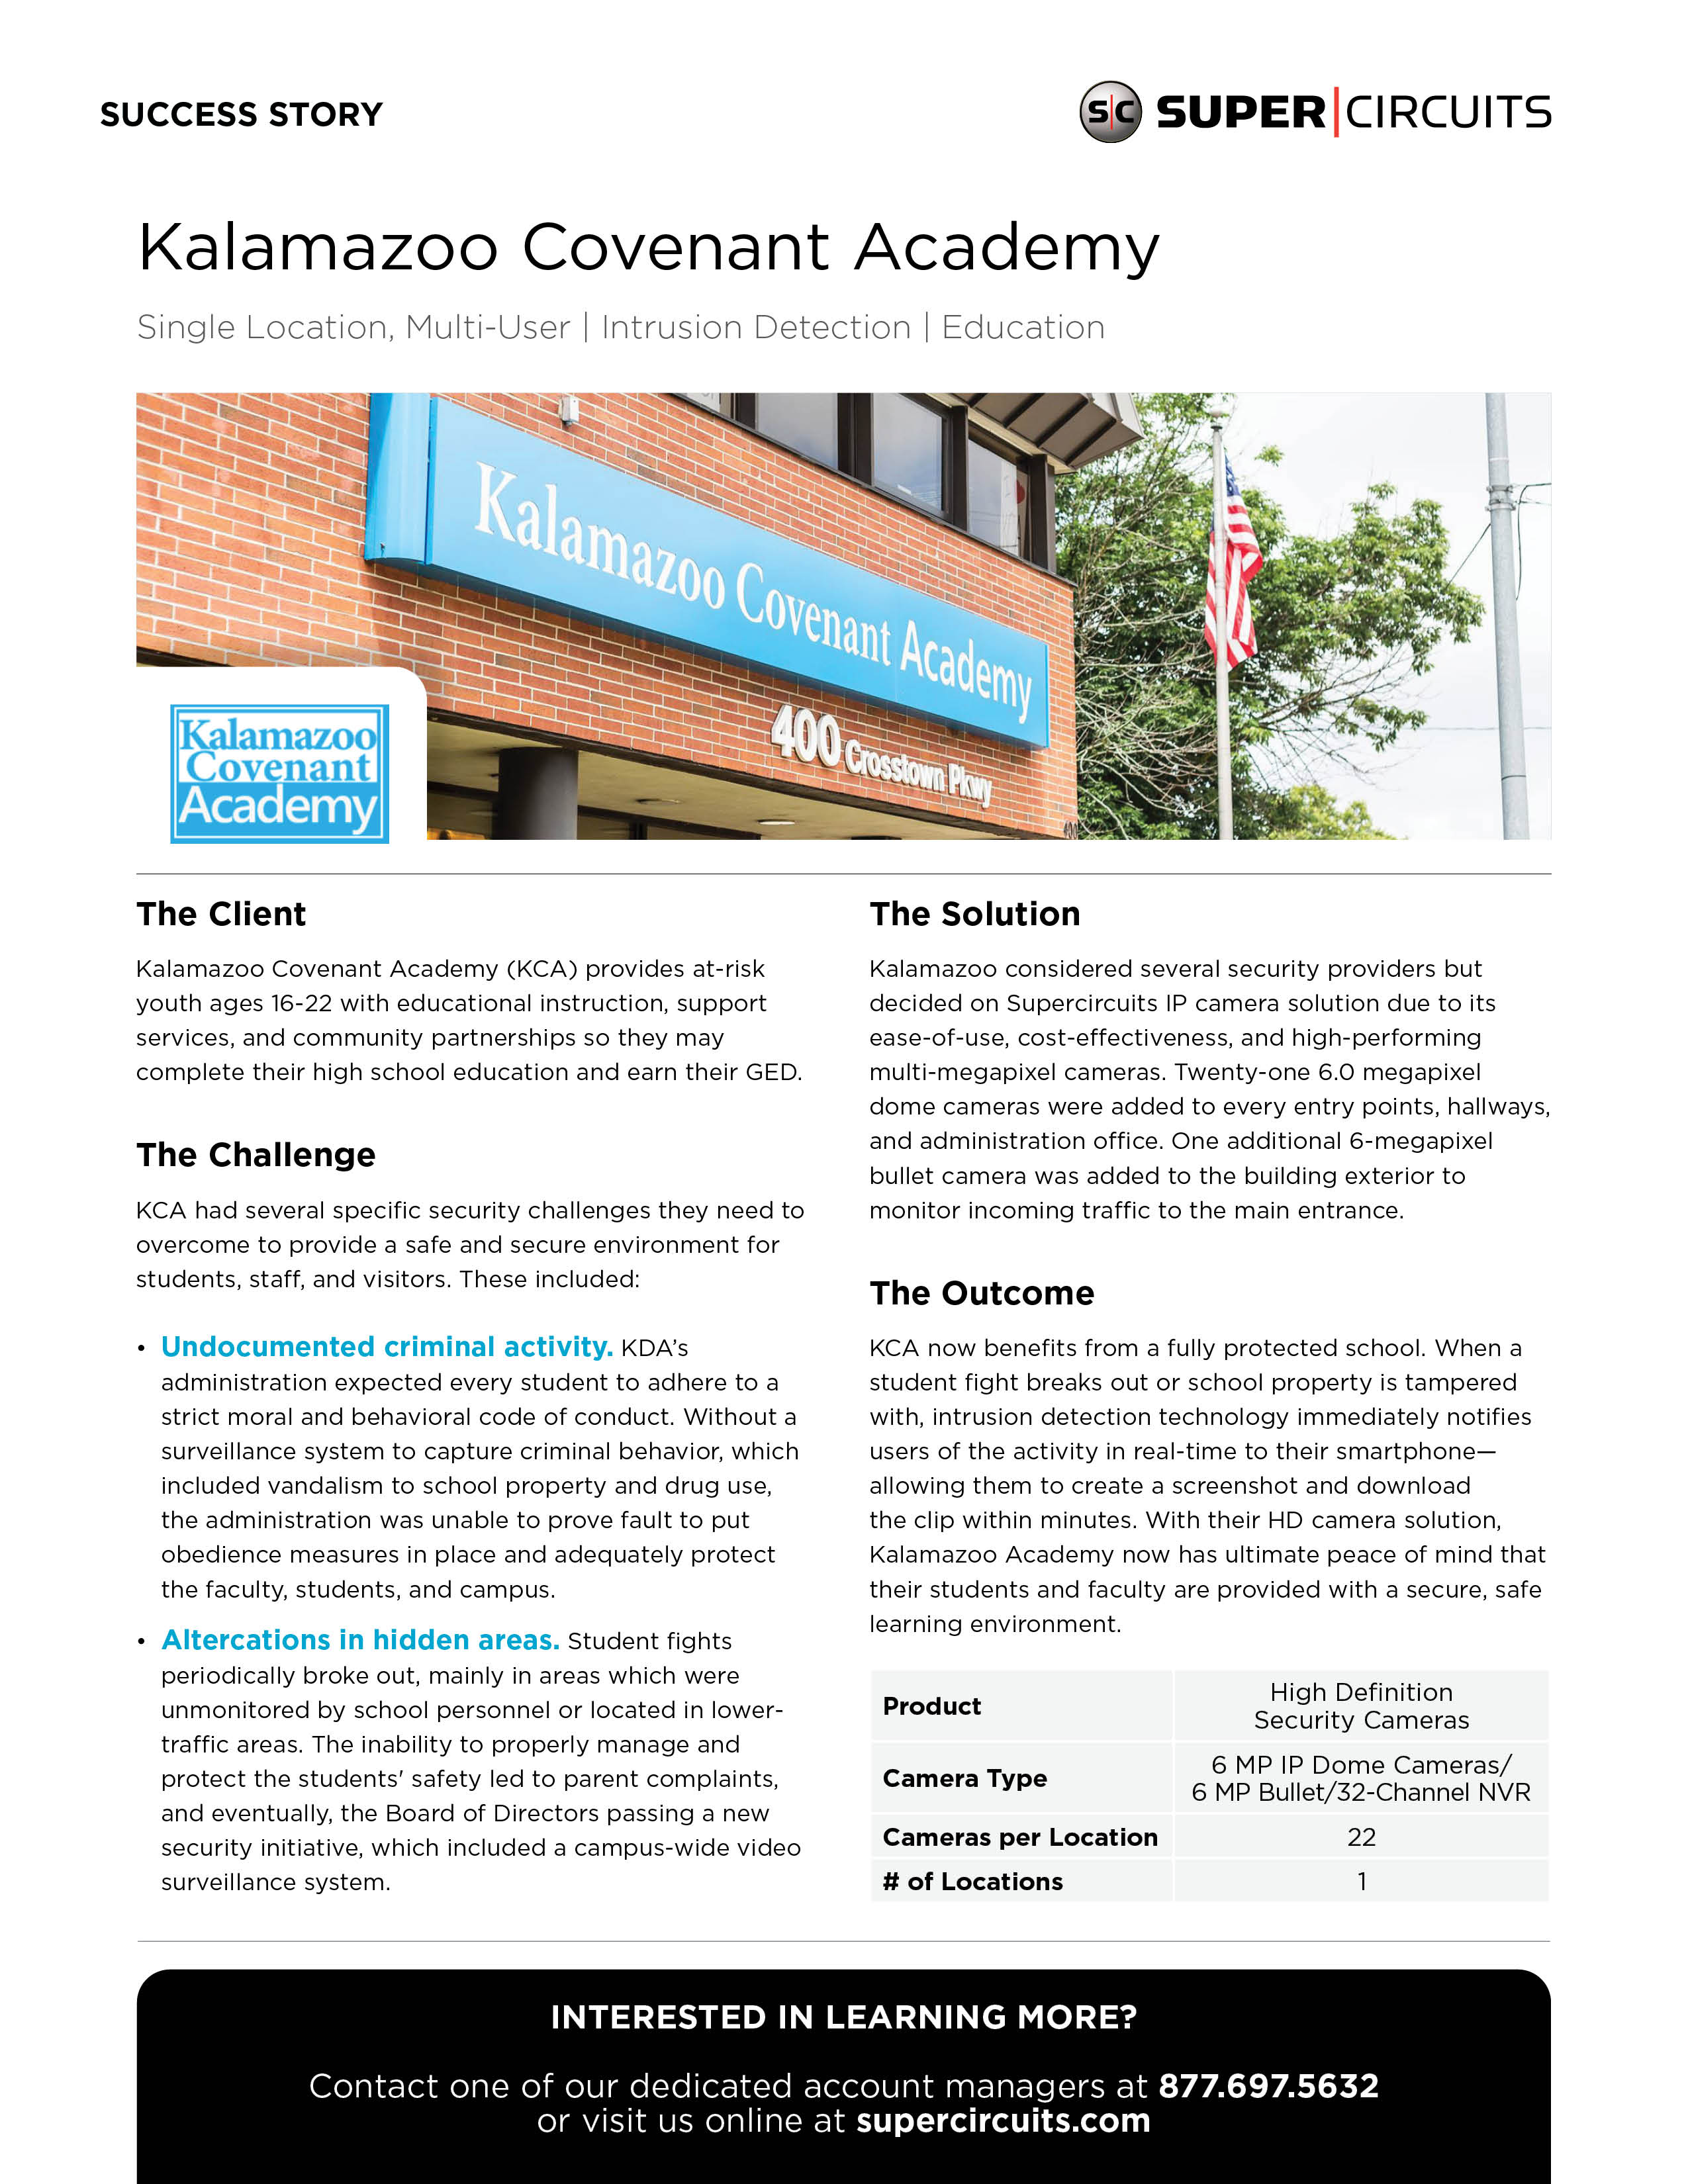 Kalamazoo Covenent Academy